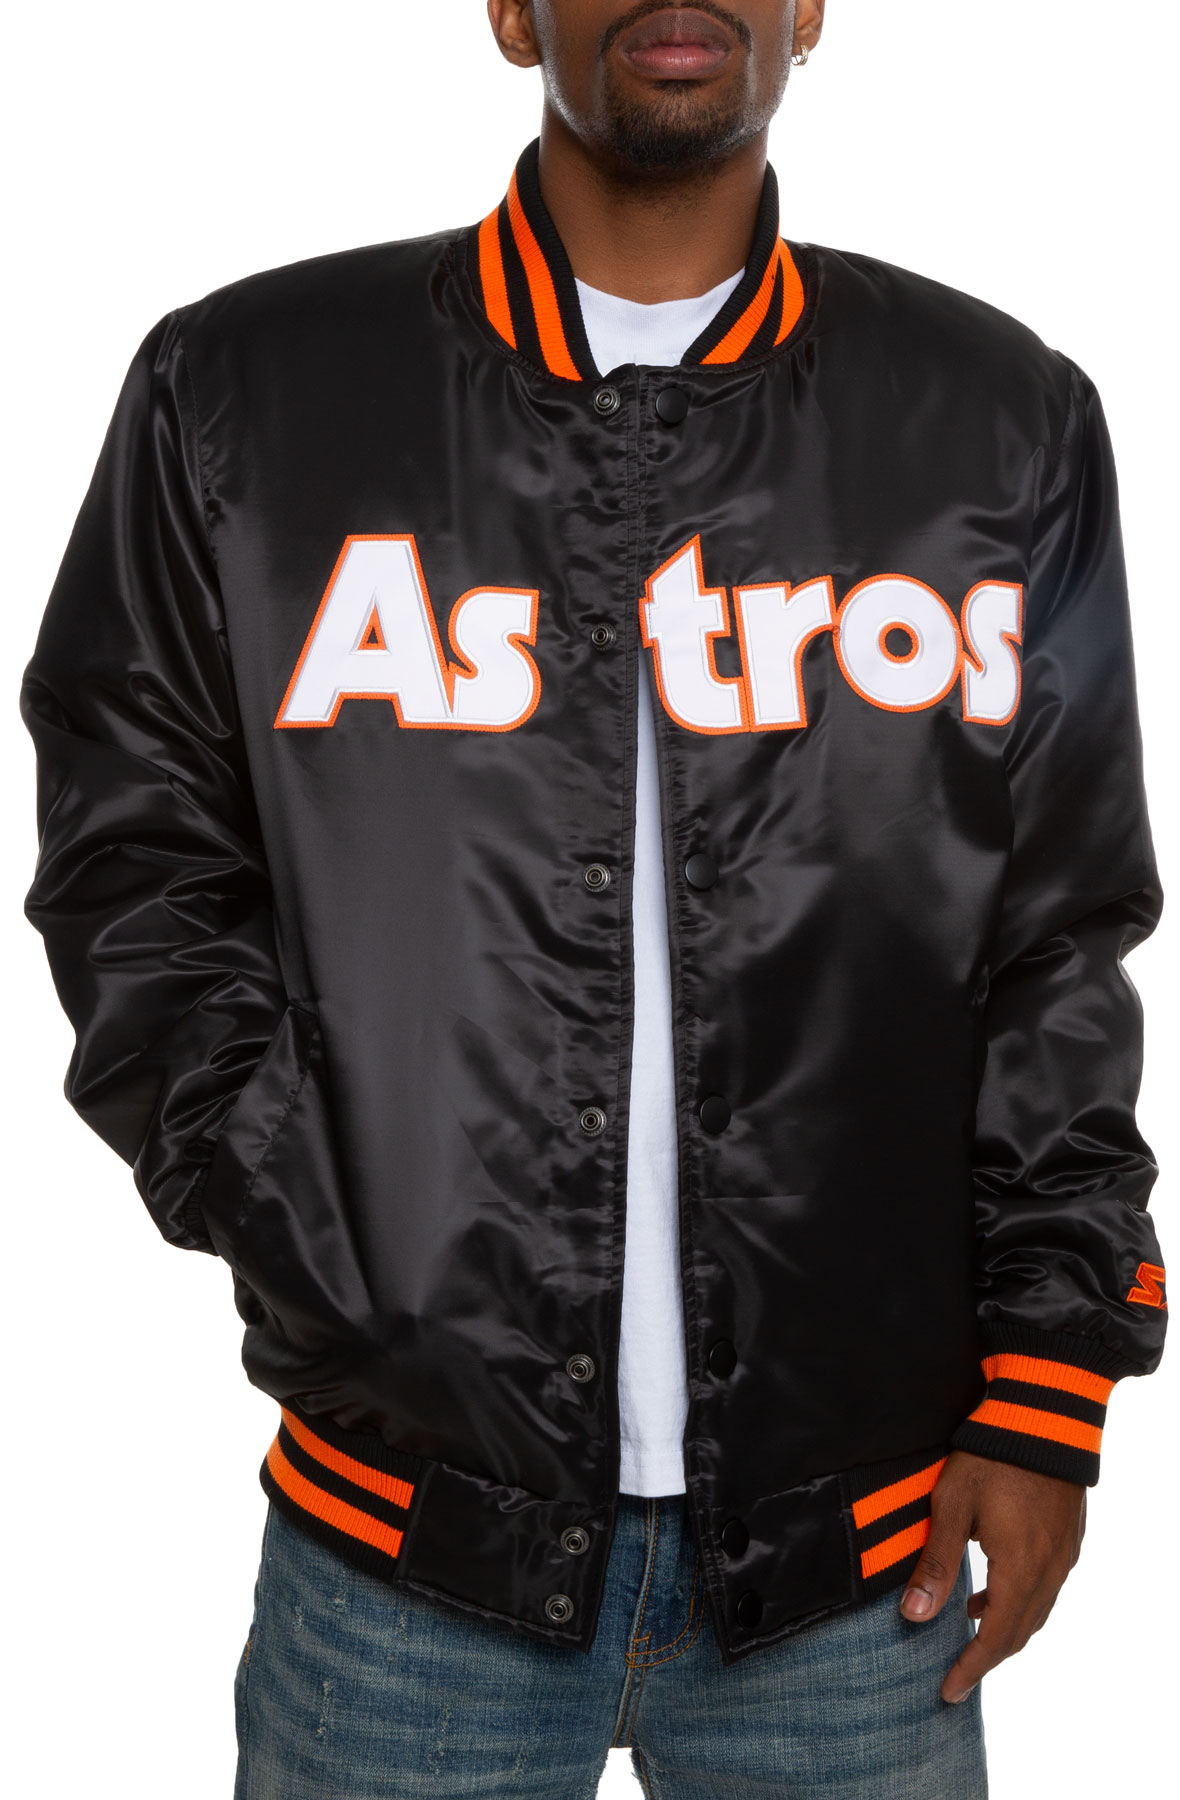 astros bling jacket